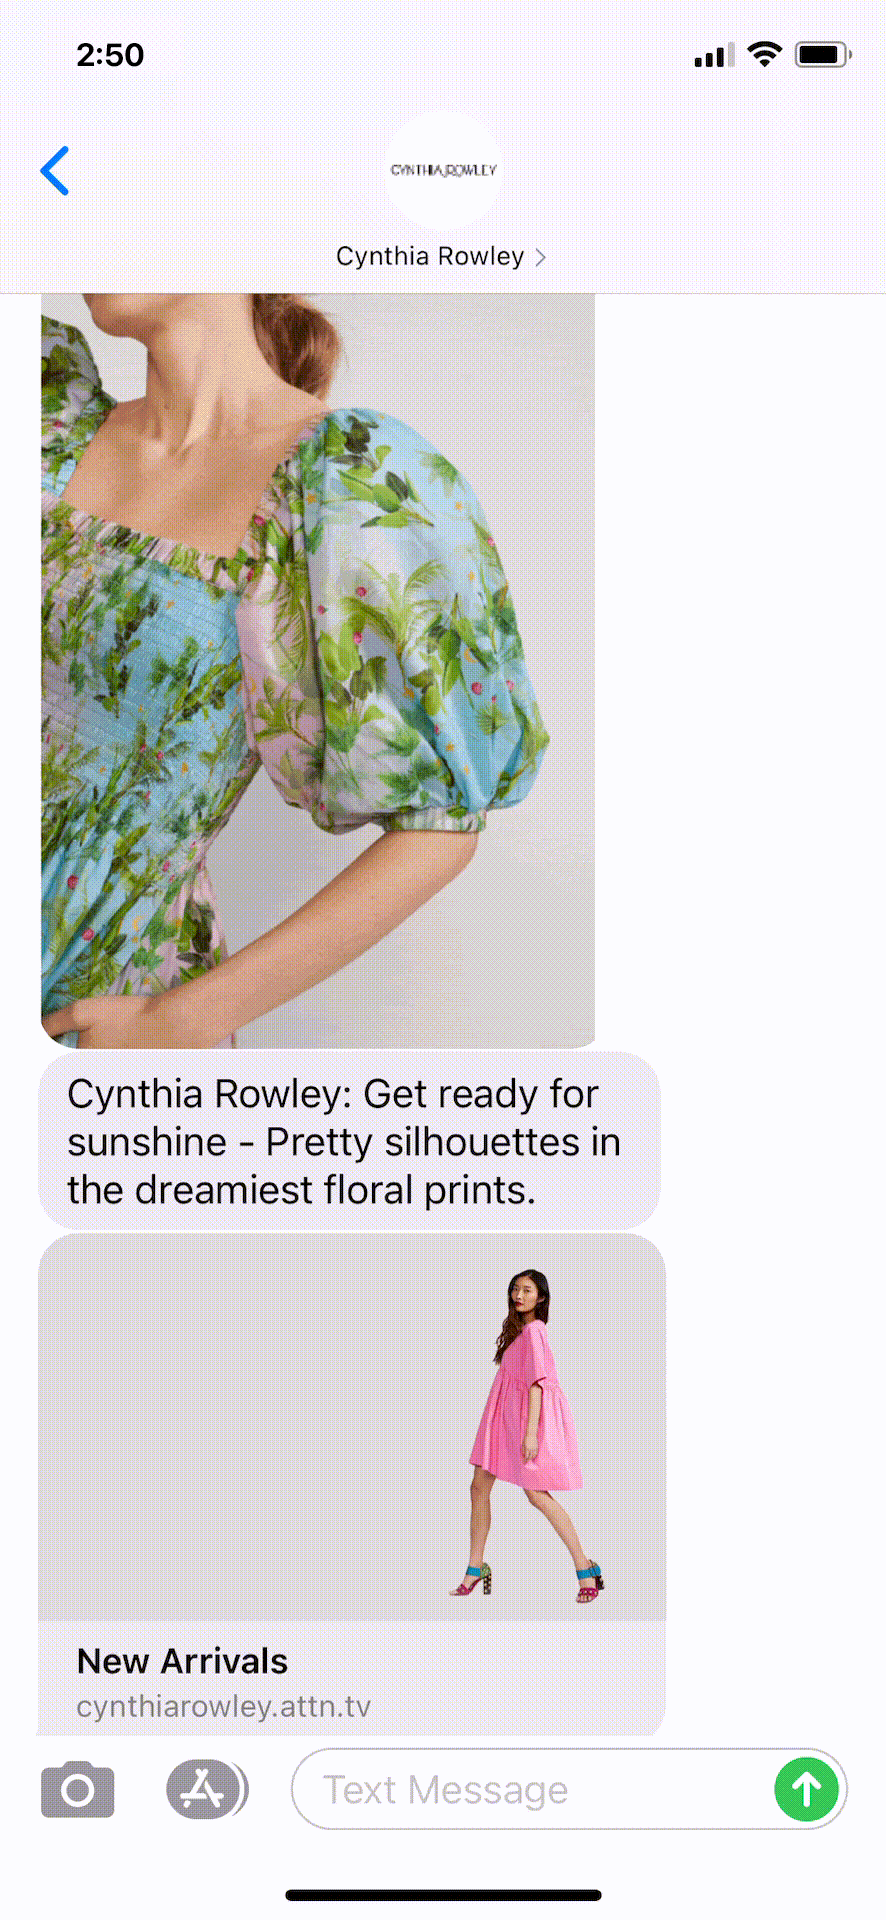 Cynthia-Rowley-Text-Message-Marketing-Example-05.09.2021